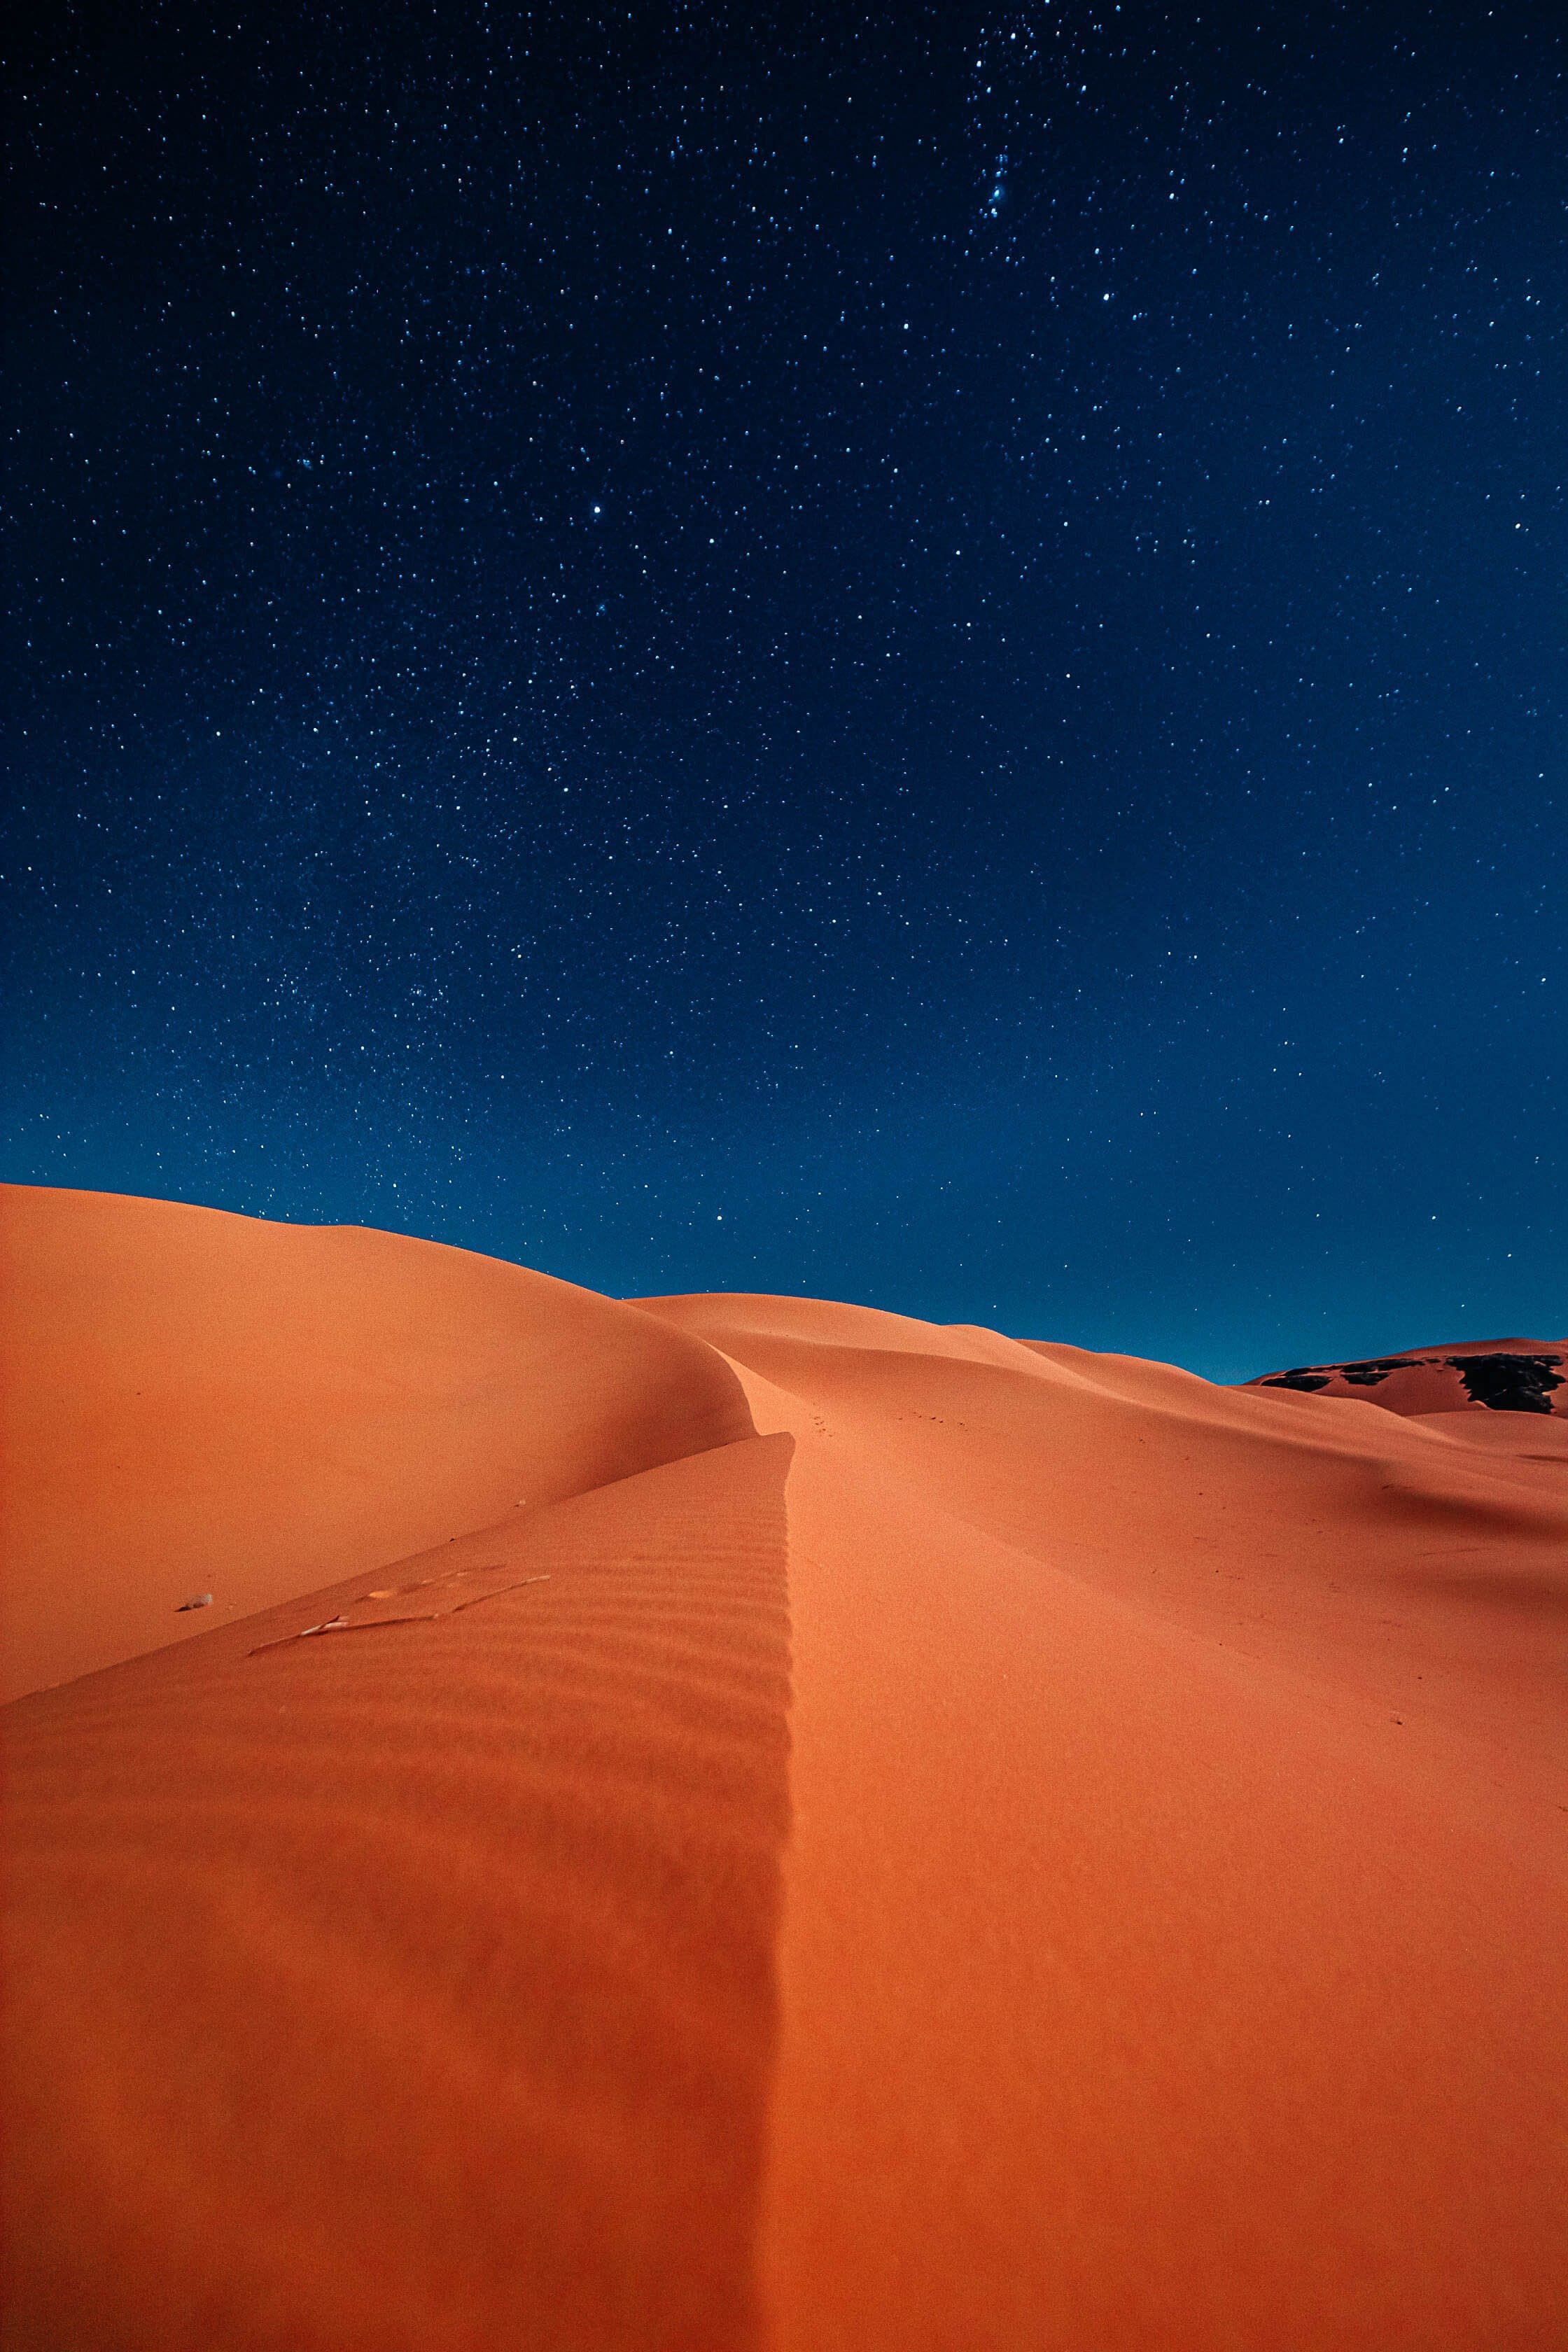 Africa Algeria Sahara Desert At Night Wallpapers